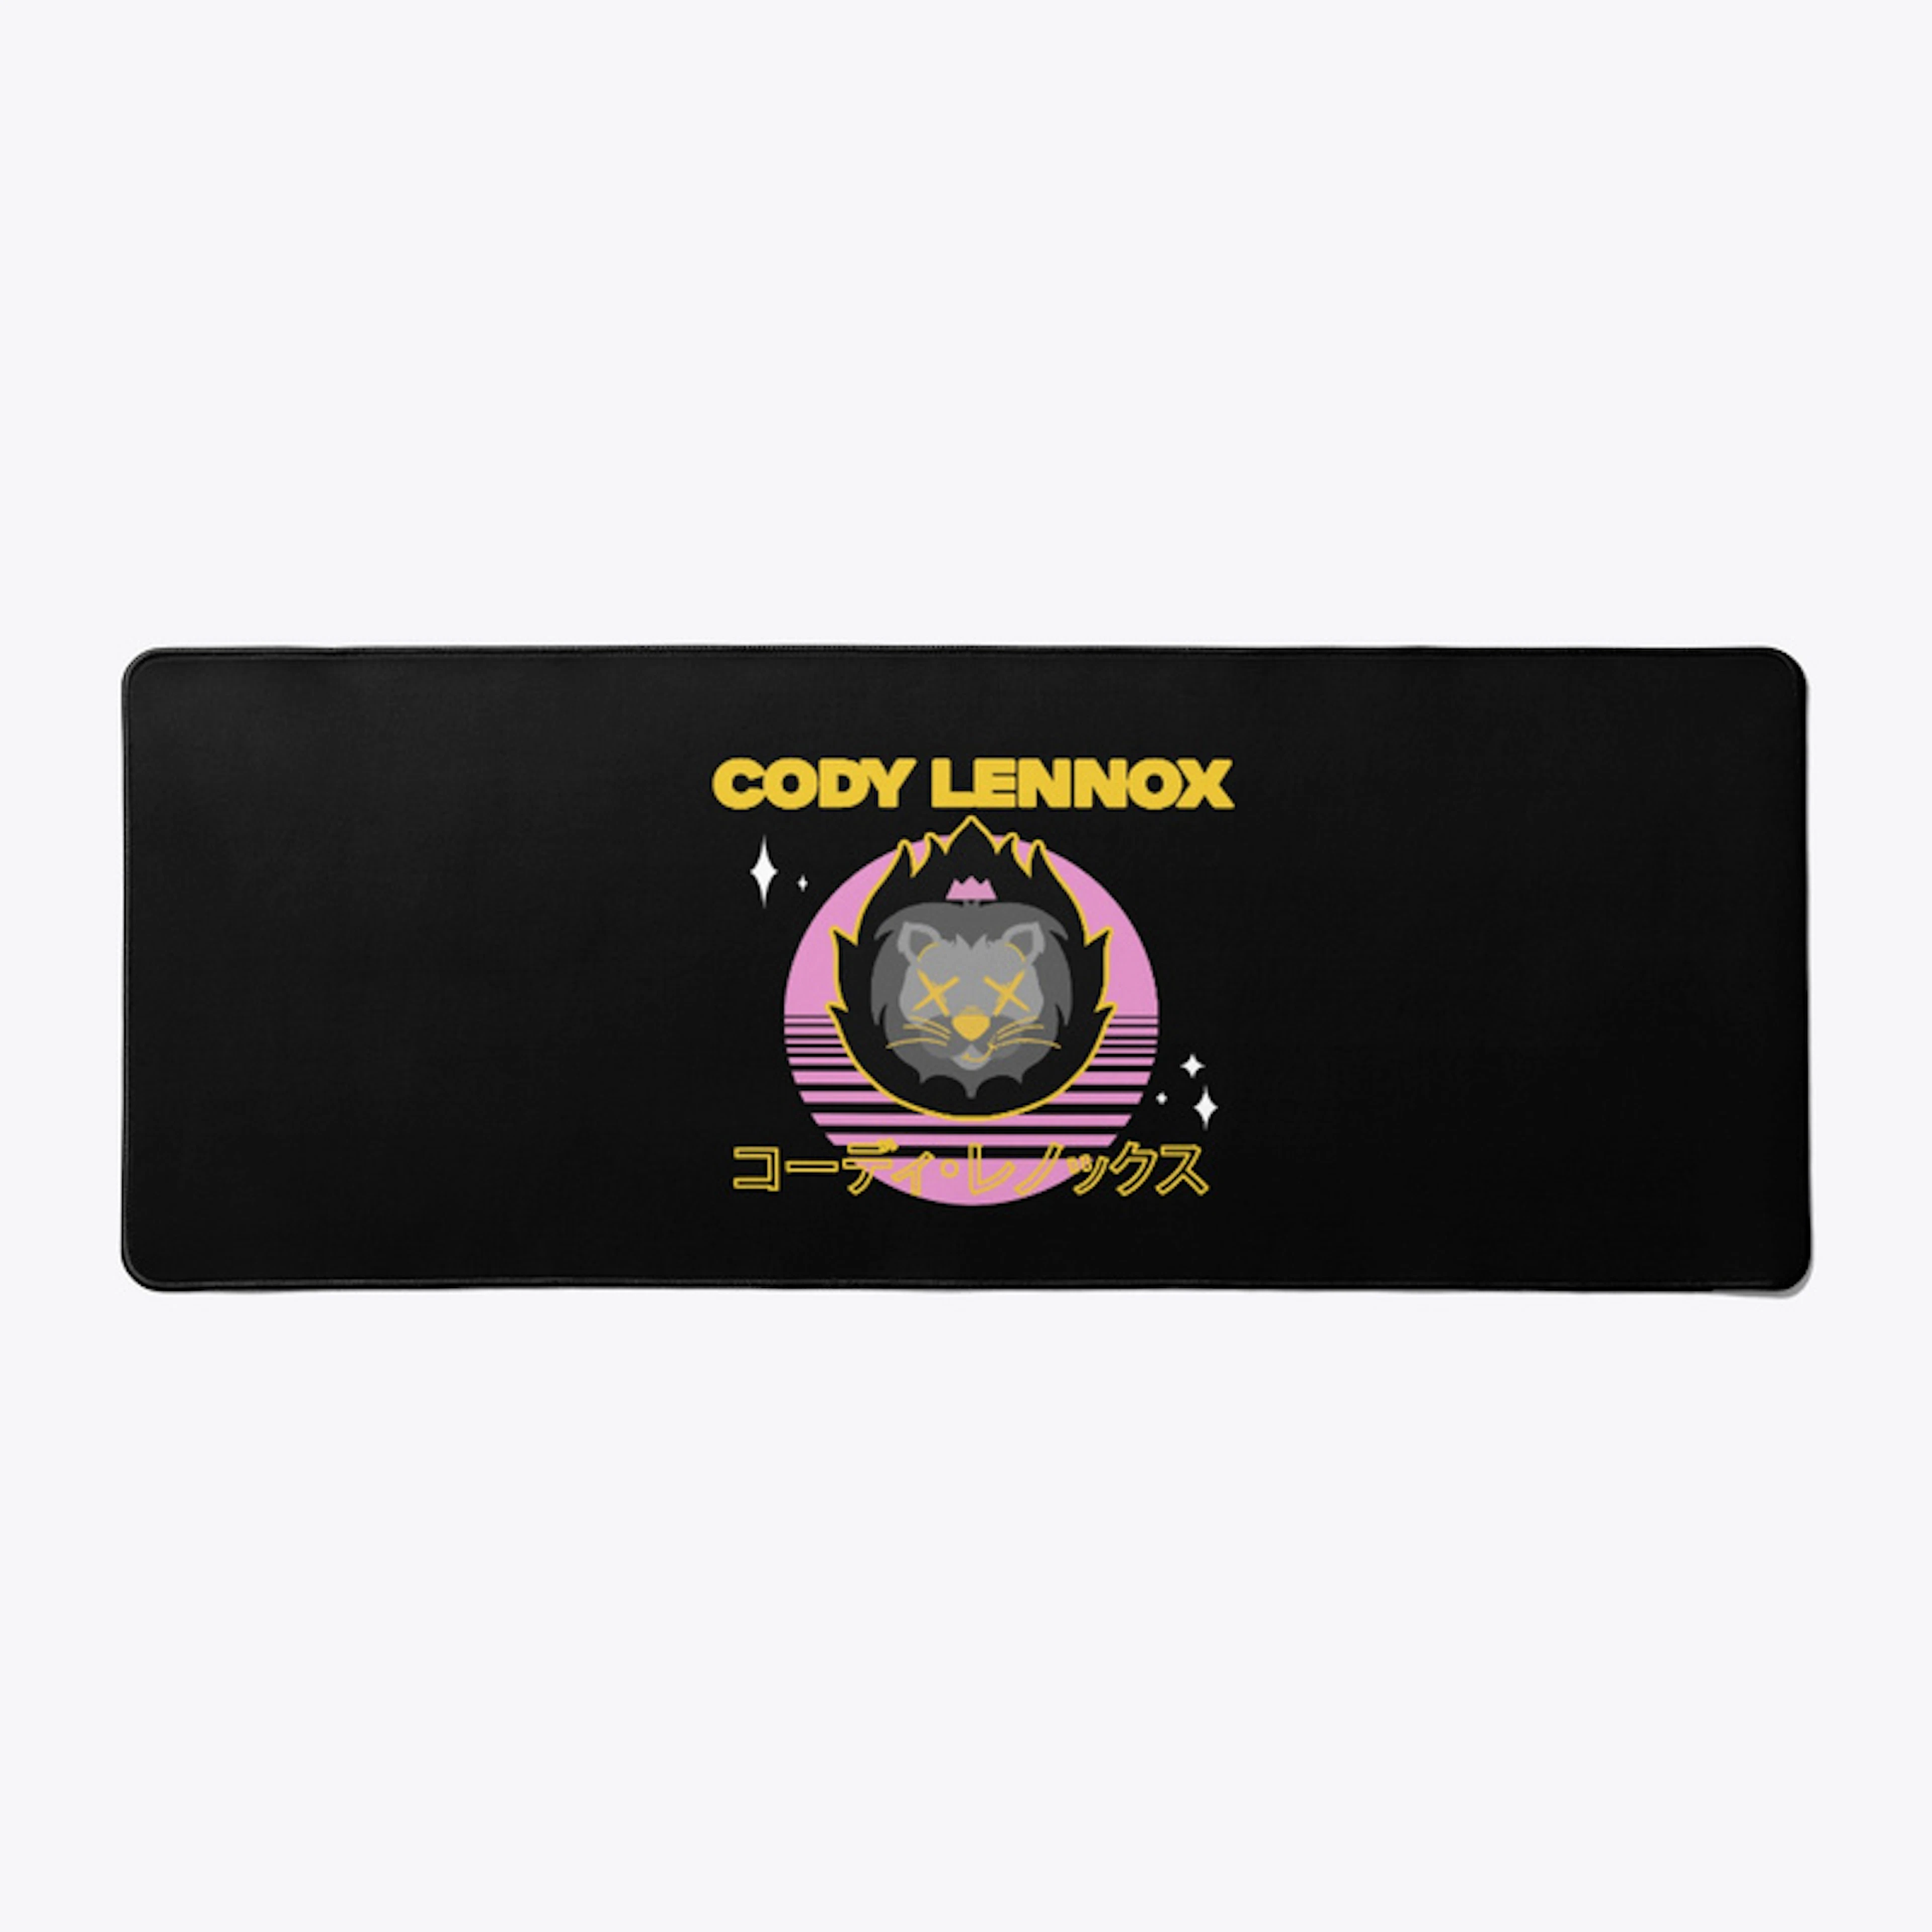 Cody Lennox mouse pad